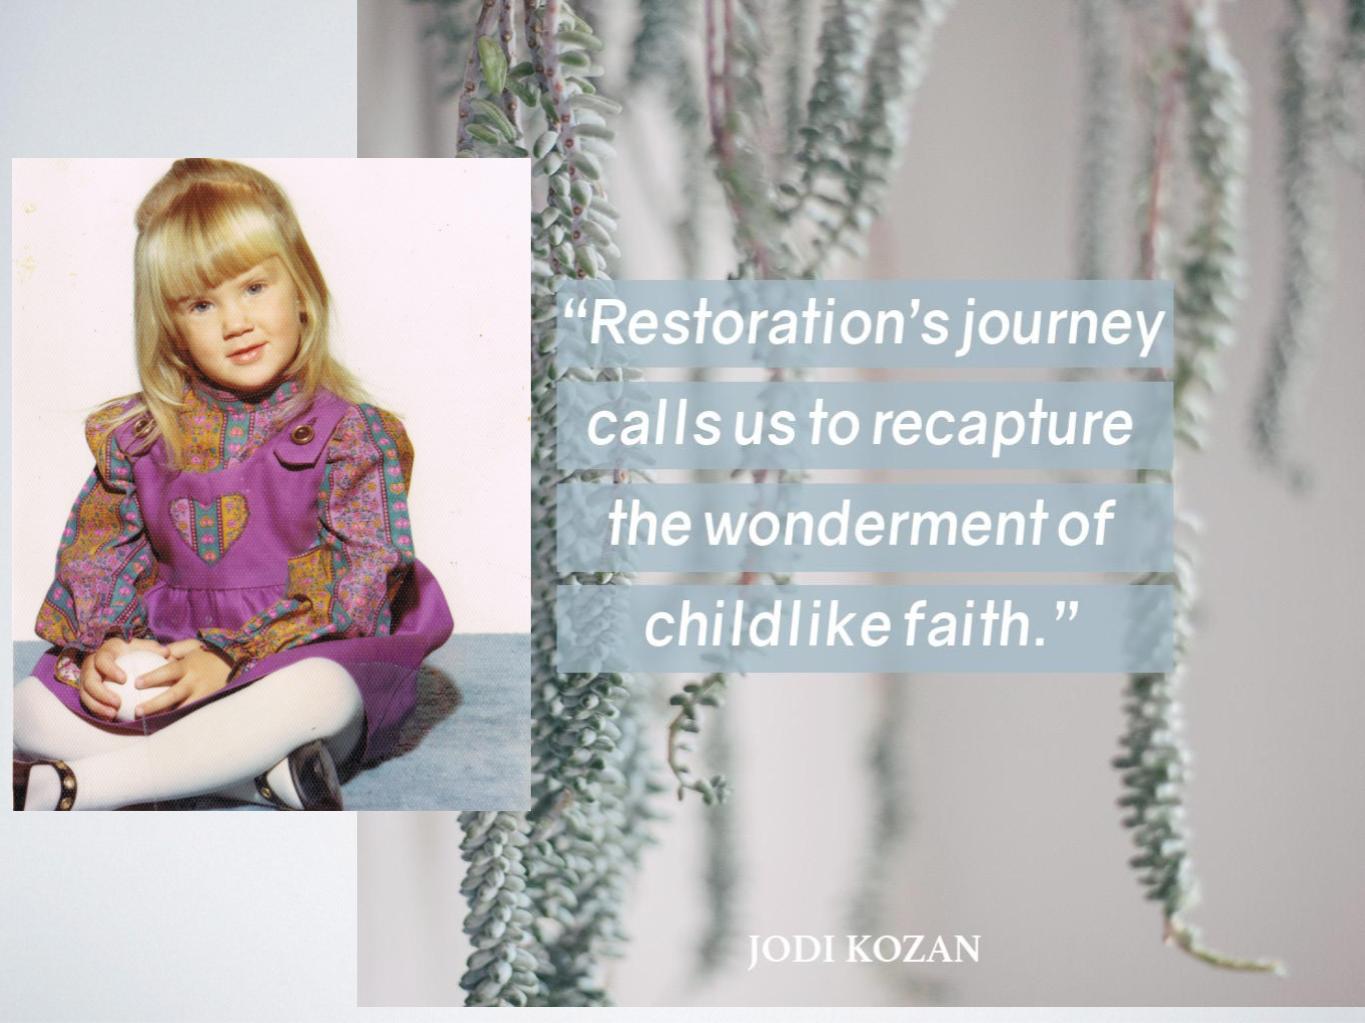 HOPE Retreat Childlike faith.jpg